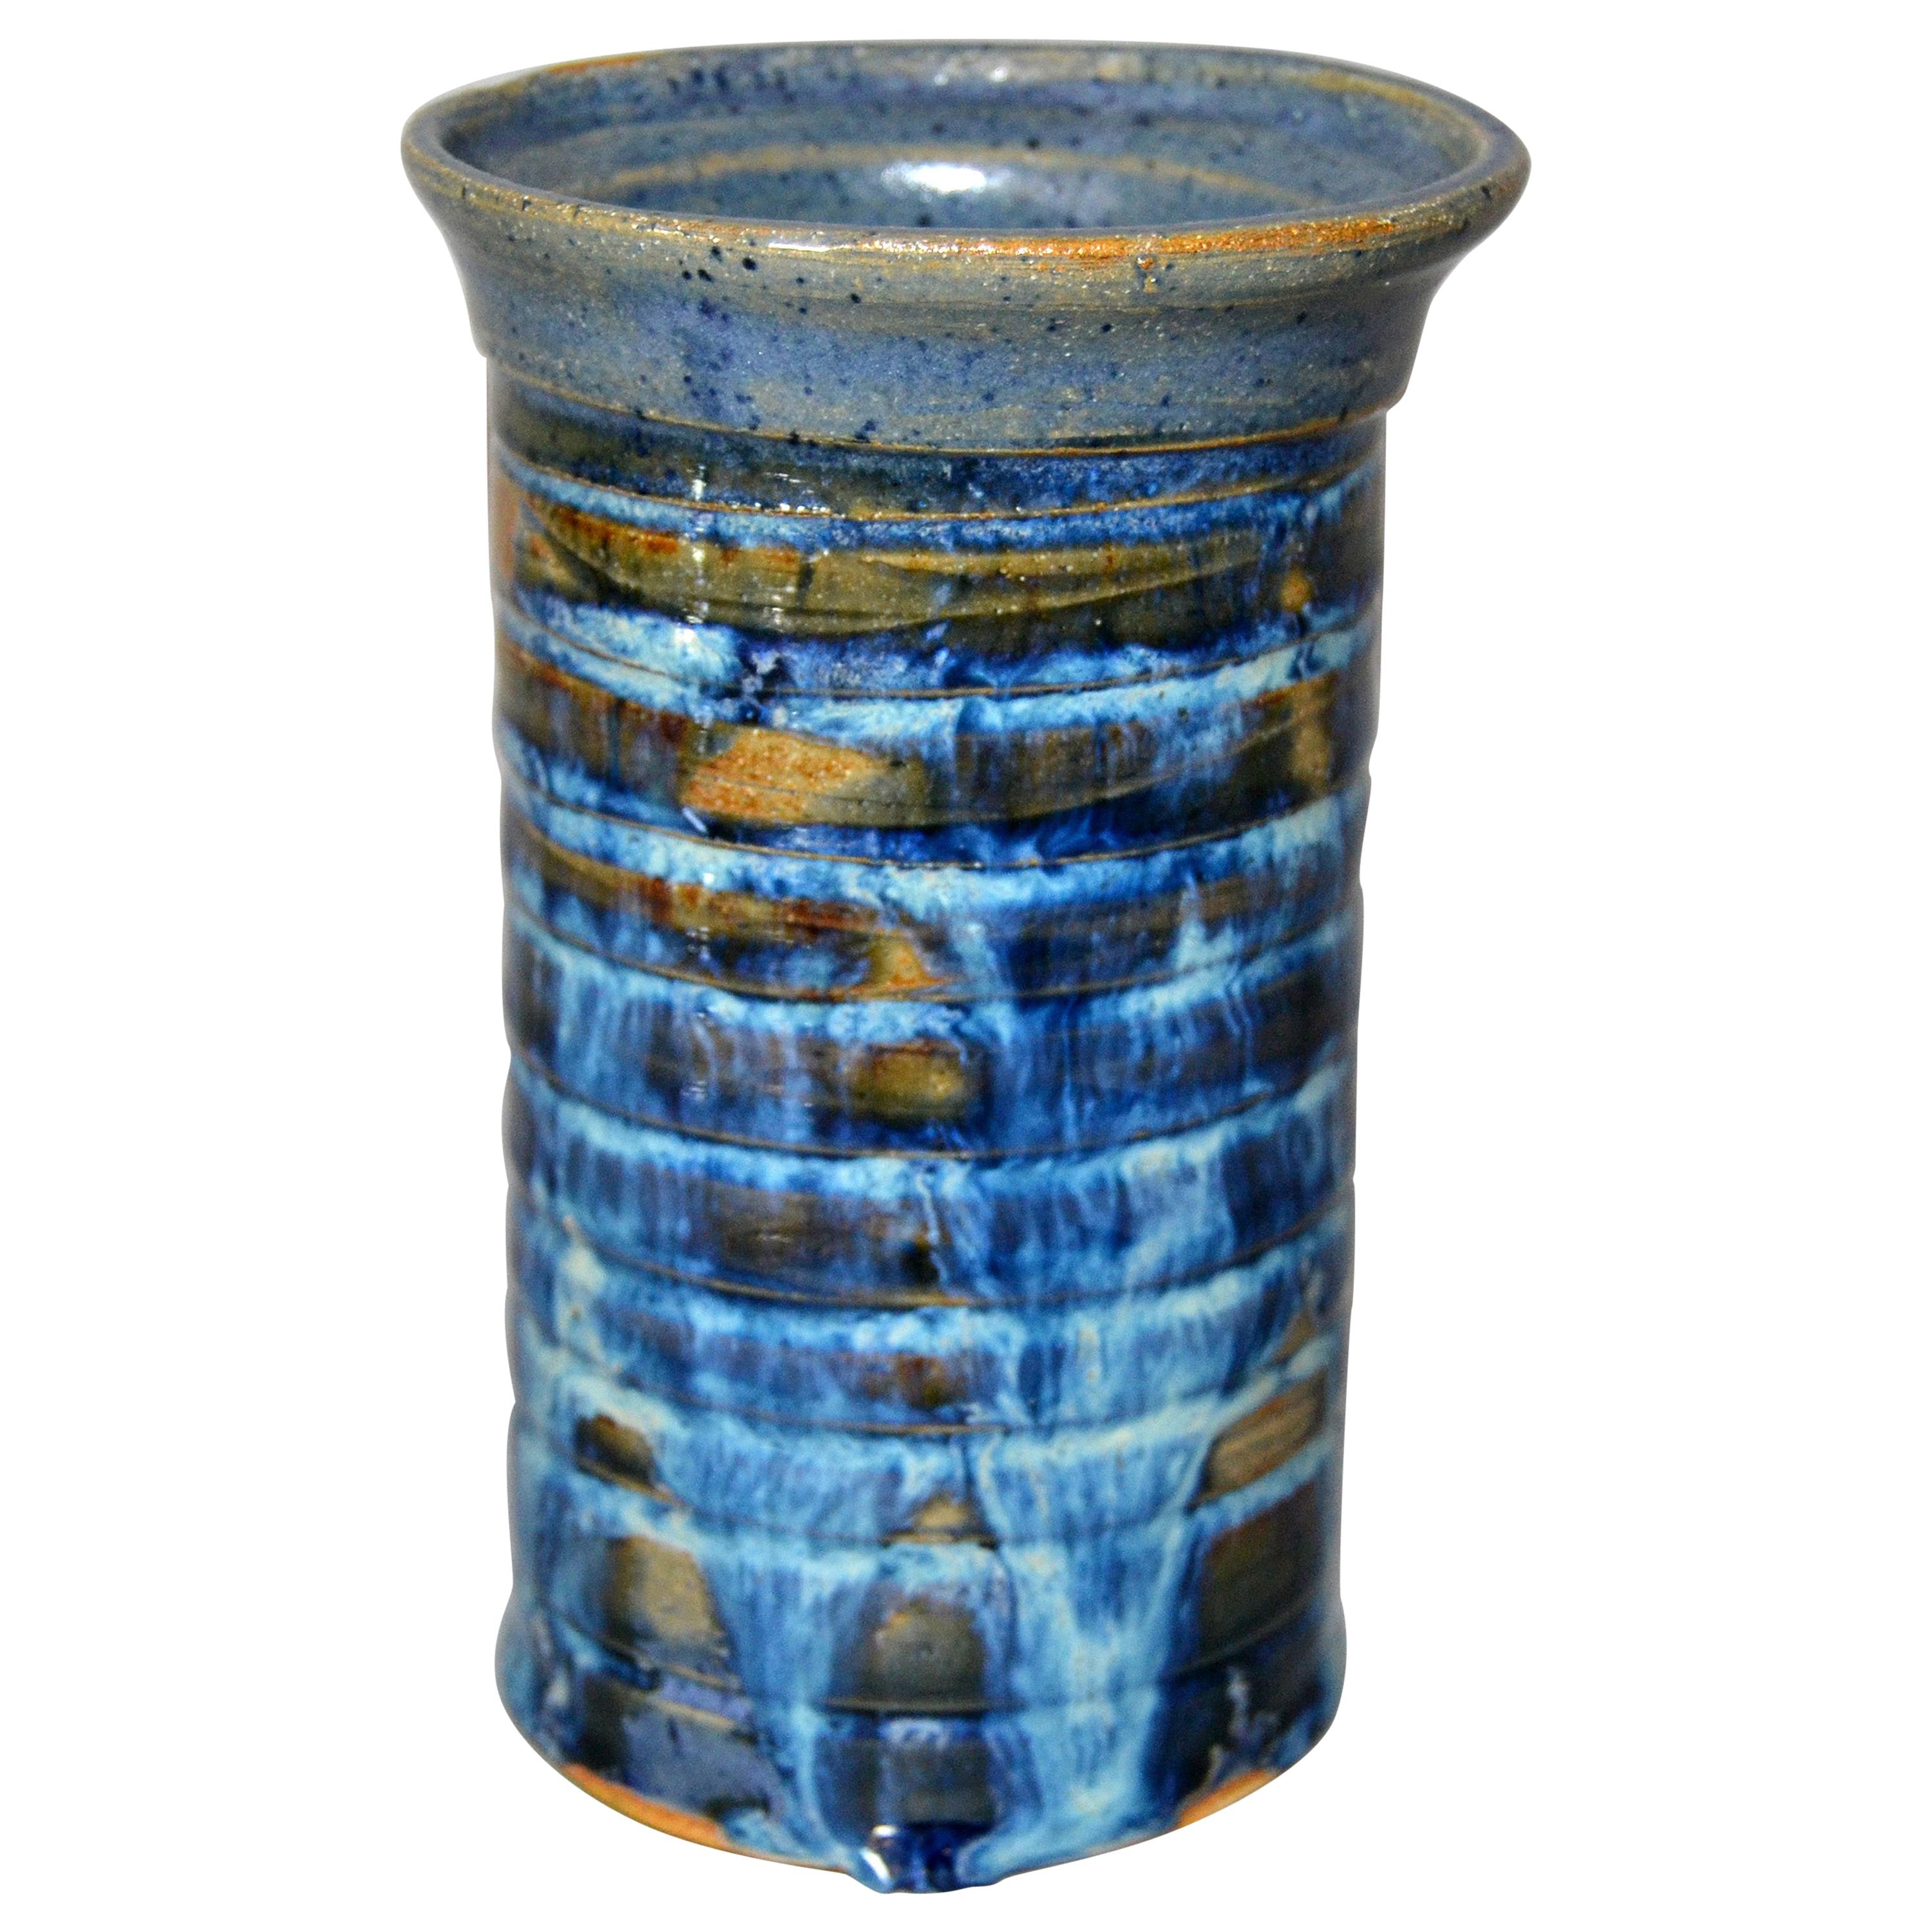 Vintage Scandinavian Modern Glazed Art Pottery Decorative Vase Shades of Blue